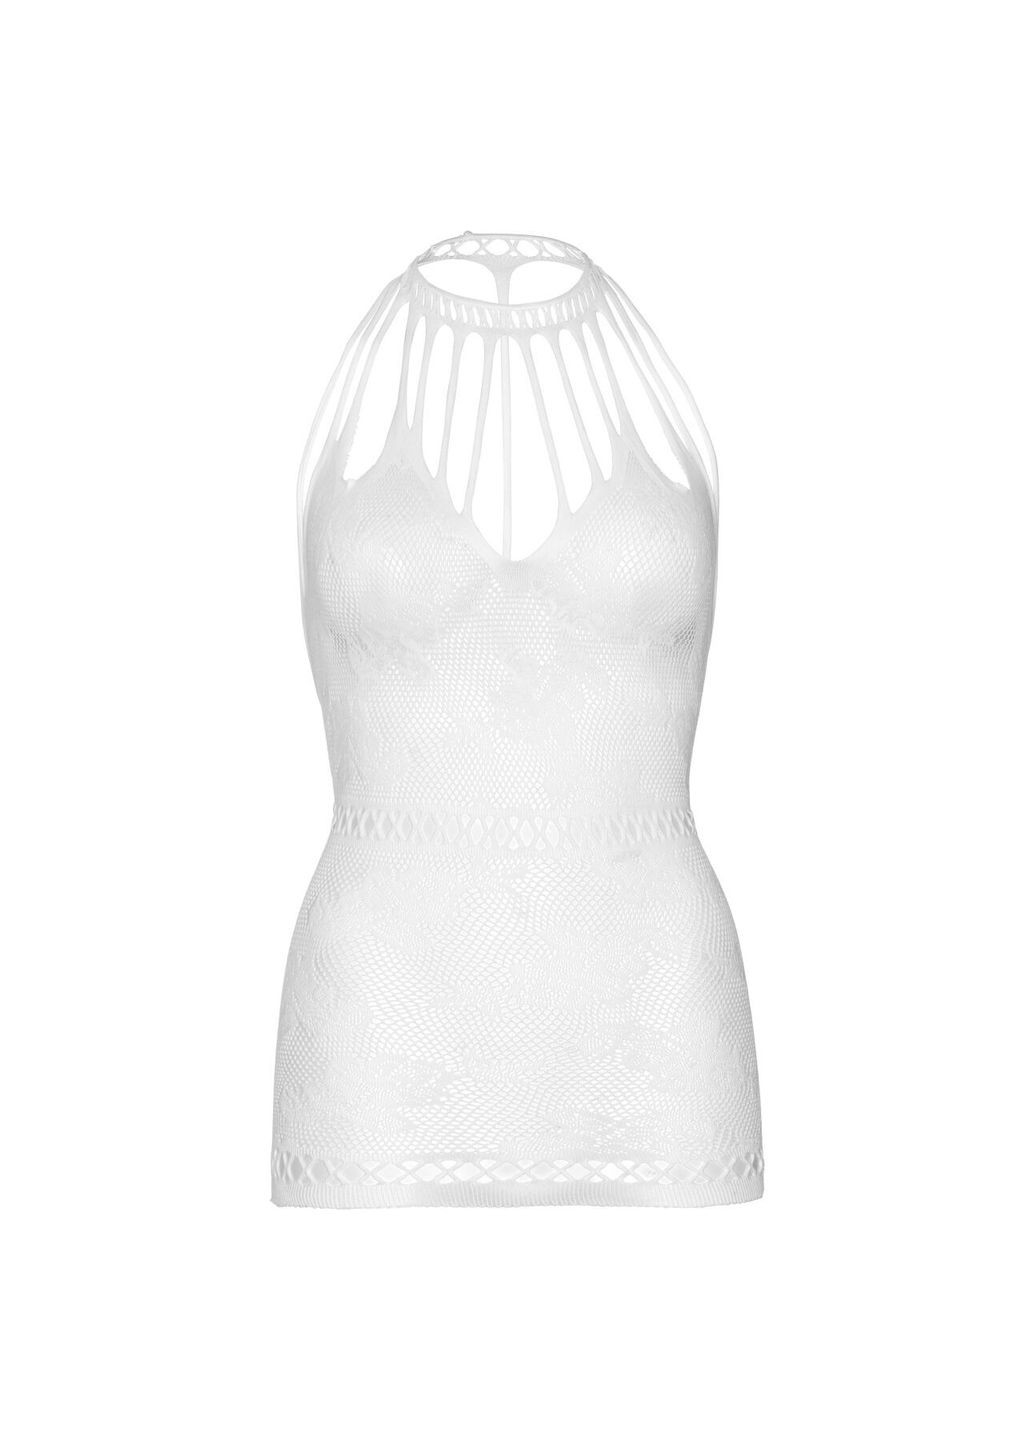 Белое ажурное платье-сетка lace mini dress with cut-outs white one size - cherrylove Leg Avenue